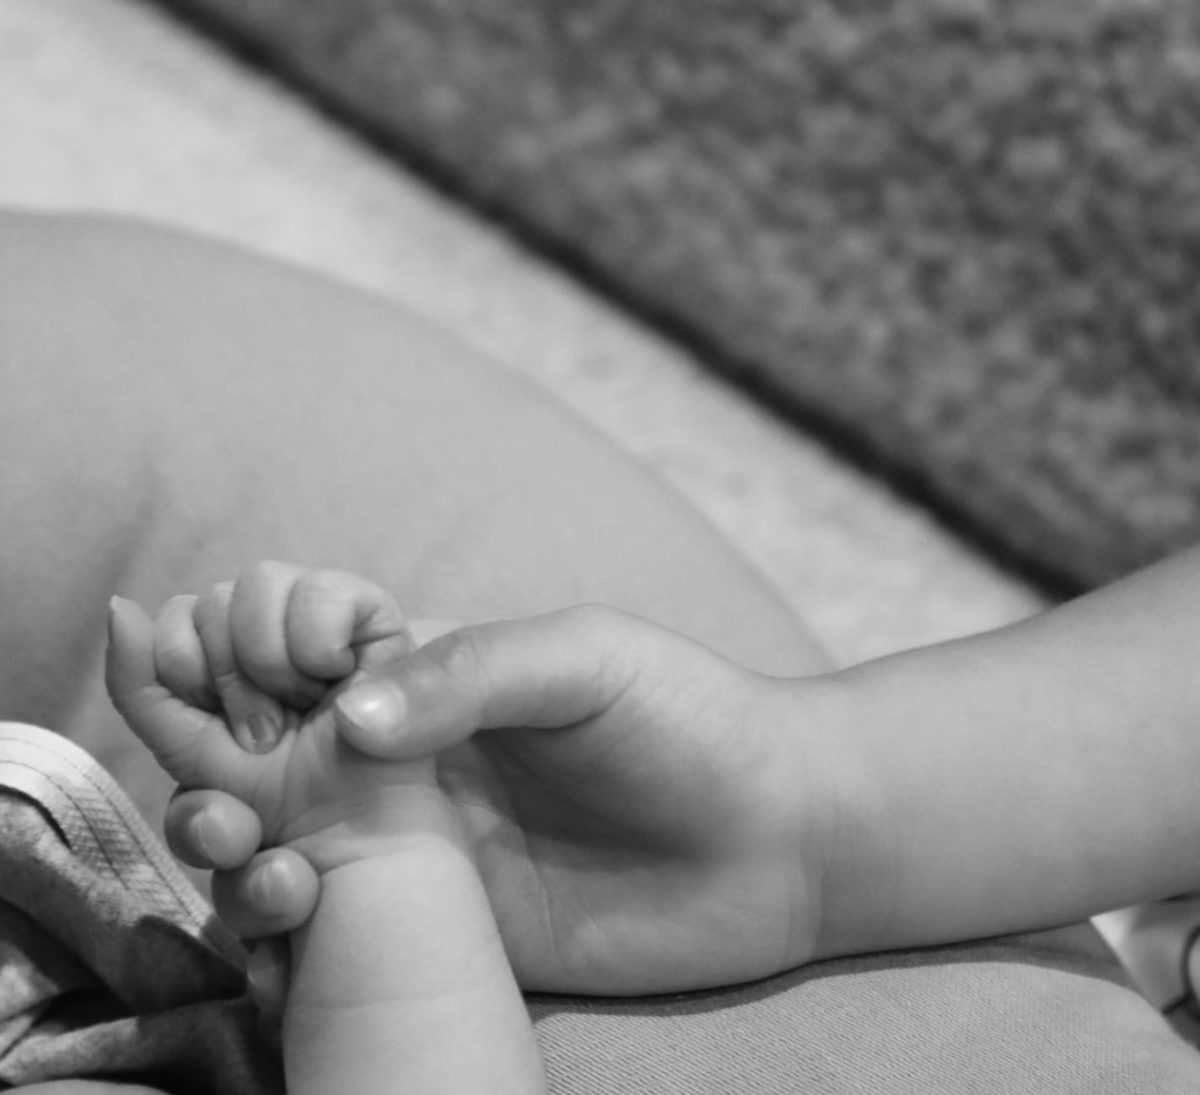 kylie jenner posts rare pregnancy footage of newborn son